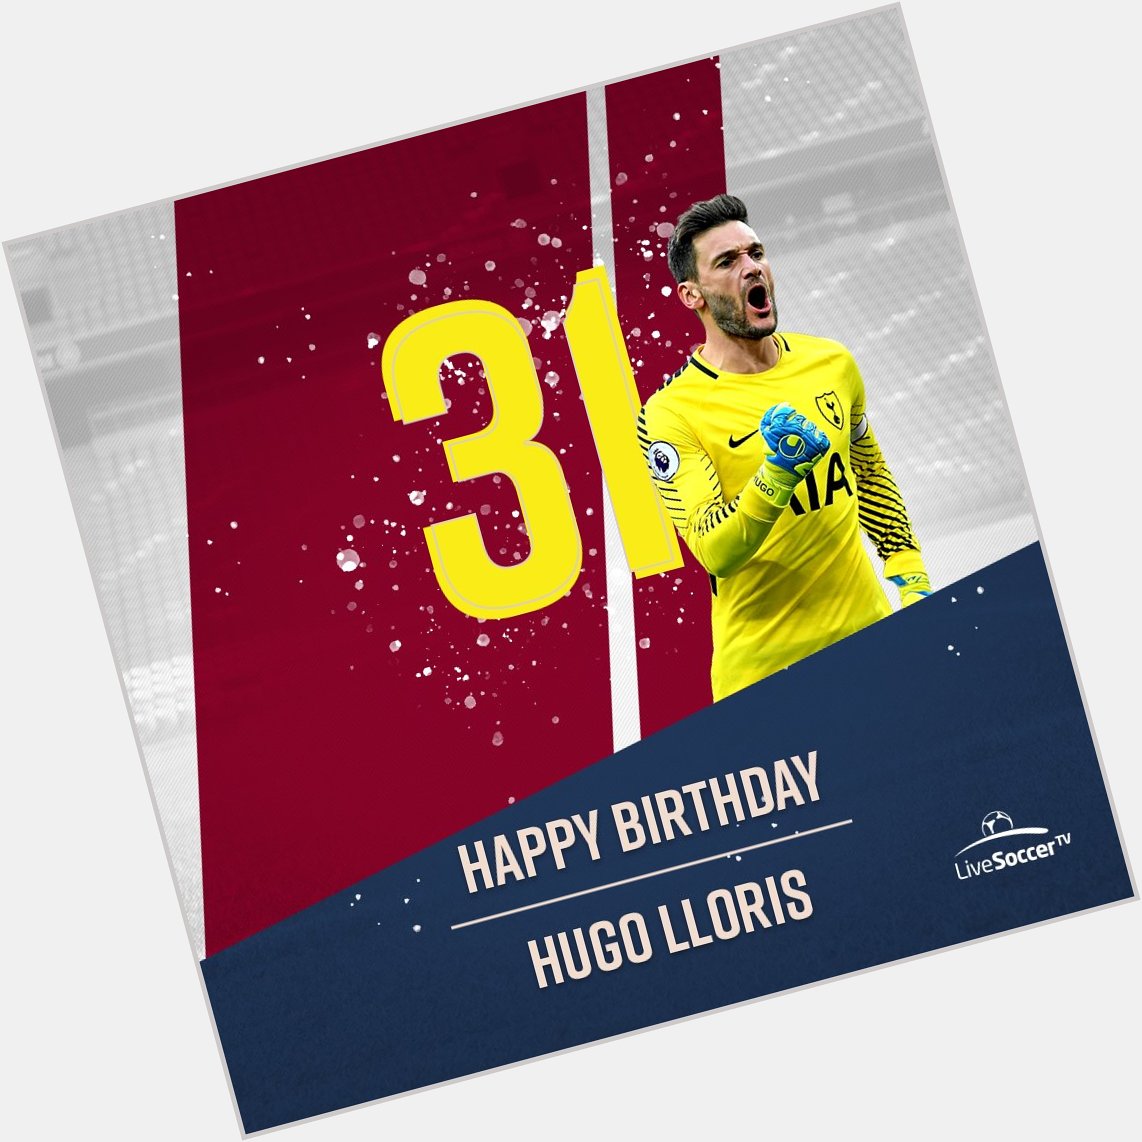 HAPPY BIRTHDAY: Hugo Lloris celebrates turning 31 on   